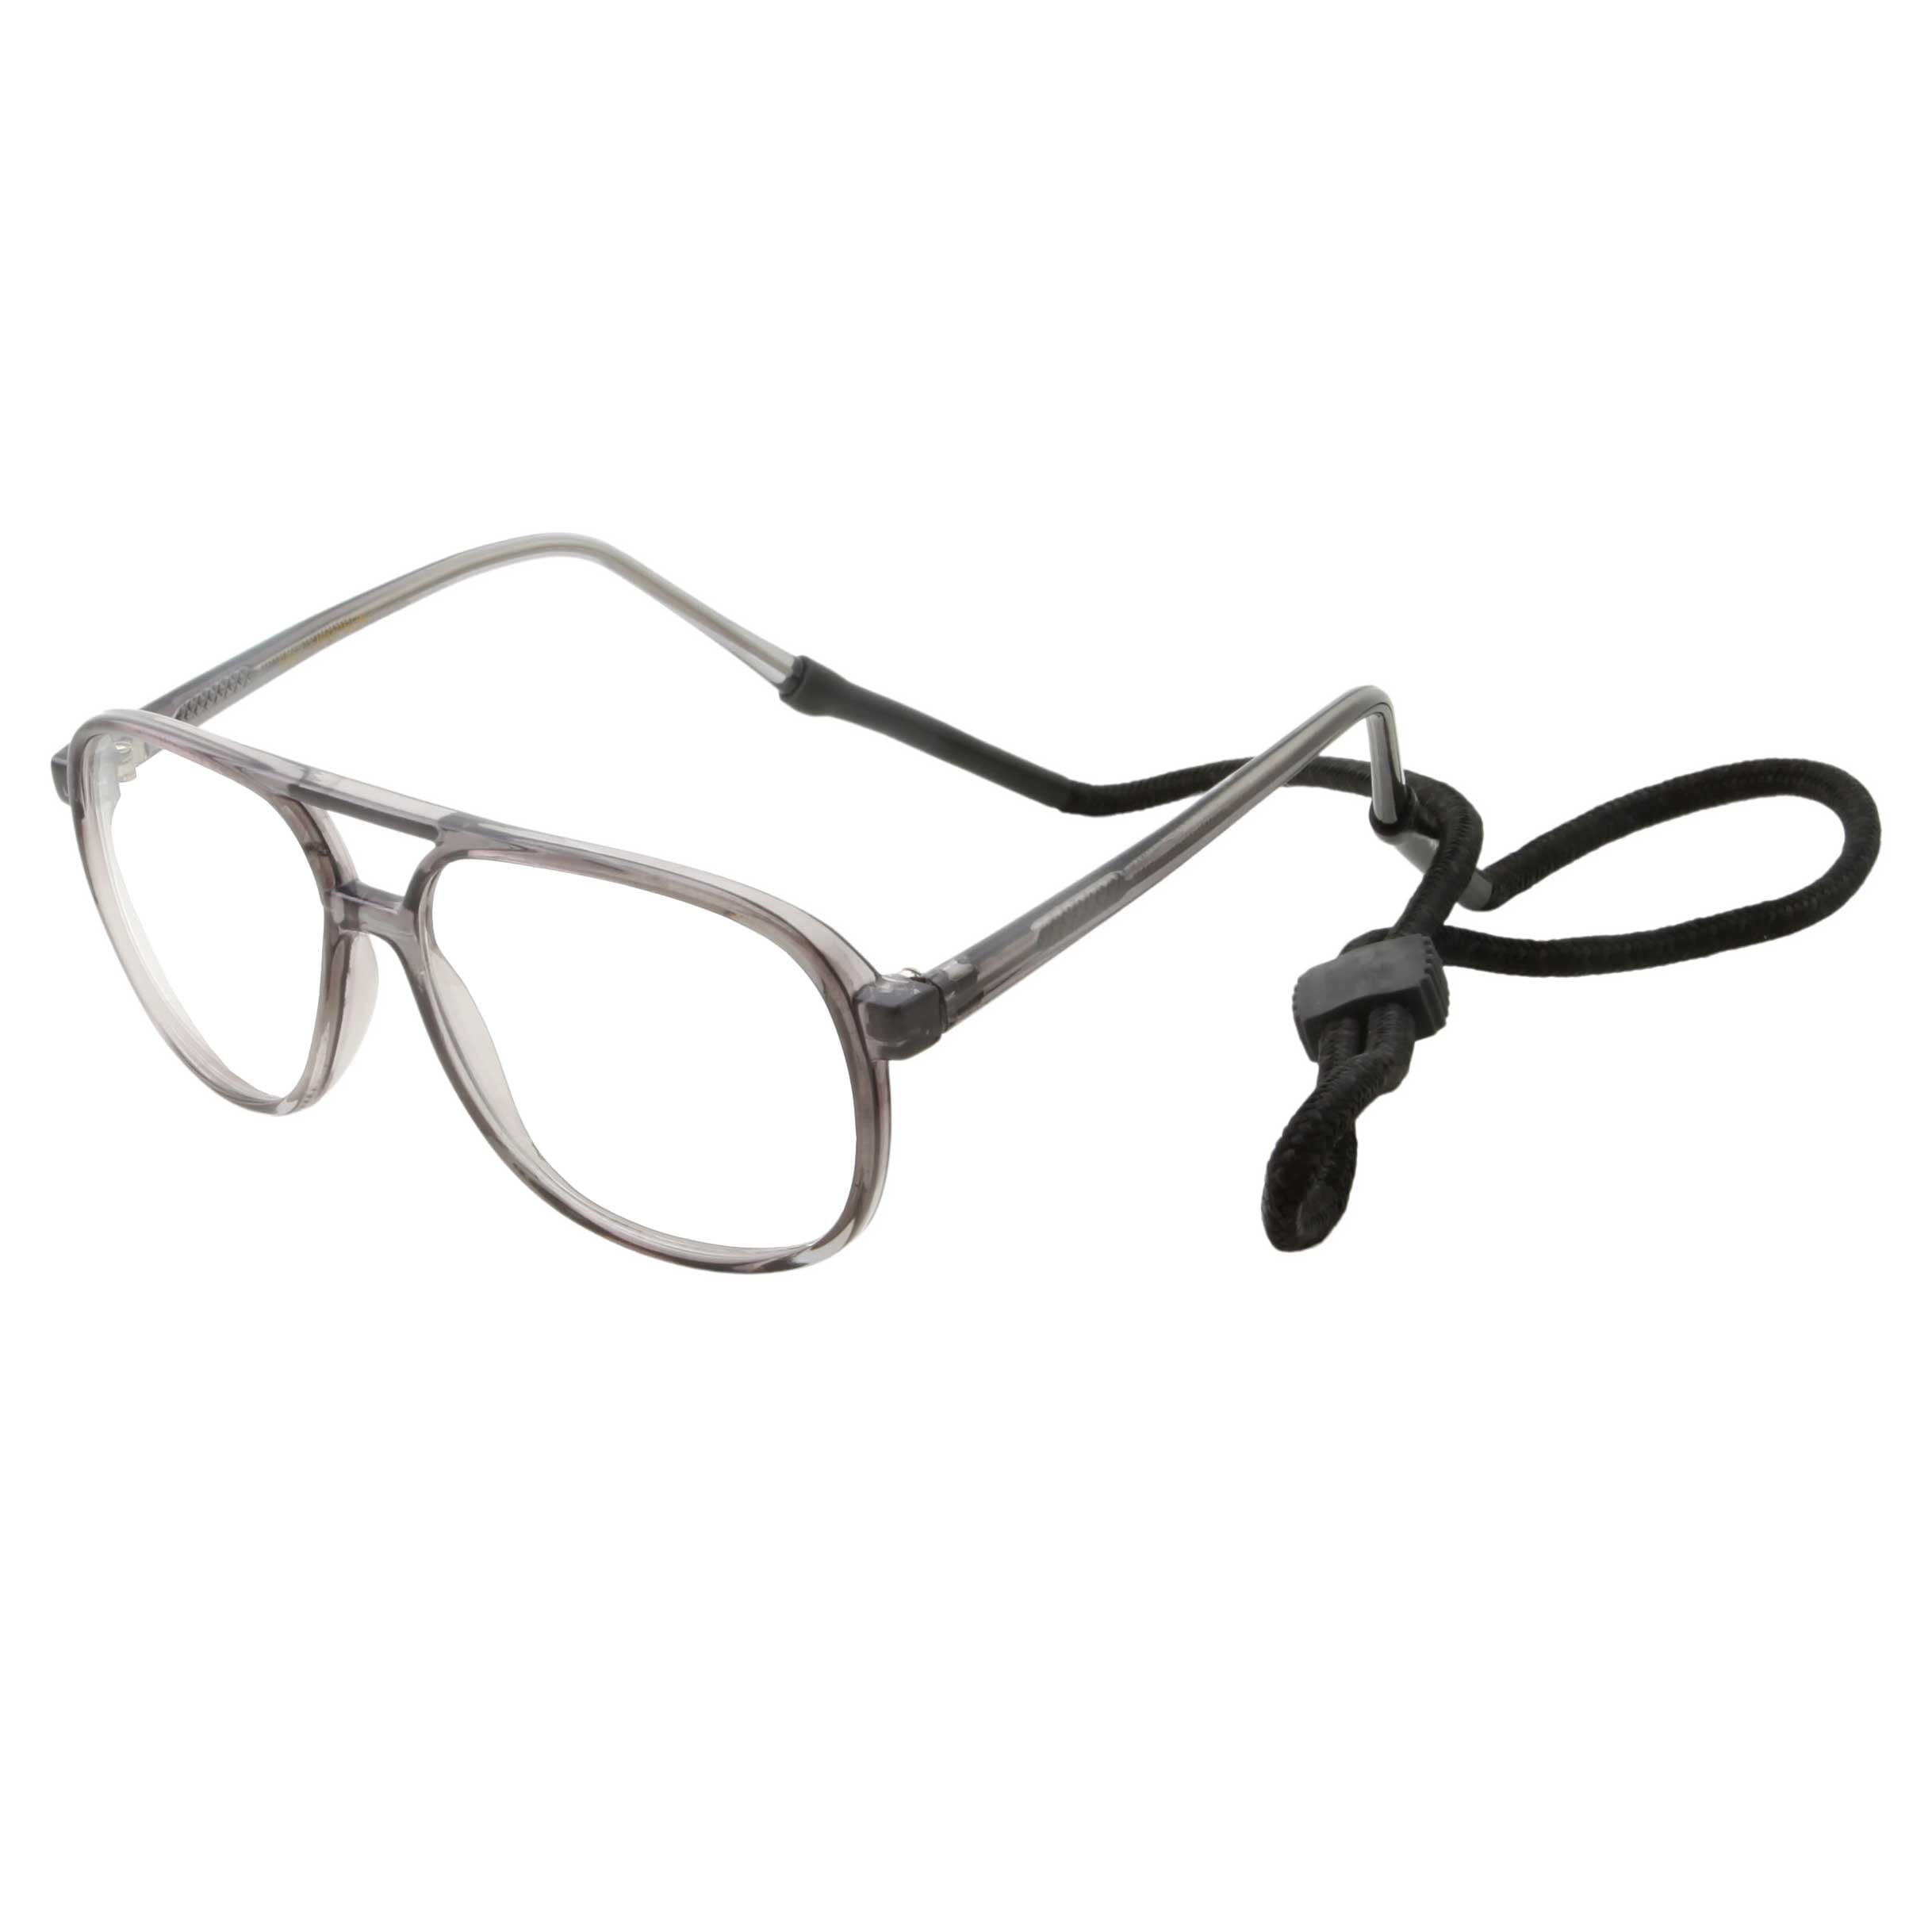 Nerd gafas übergross streberbrille negro marrón señora o caballero 355 